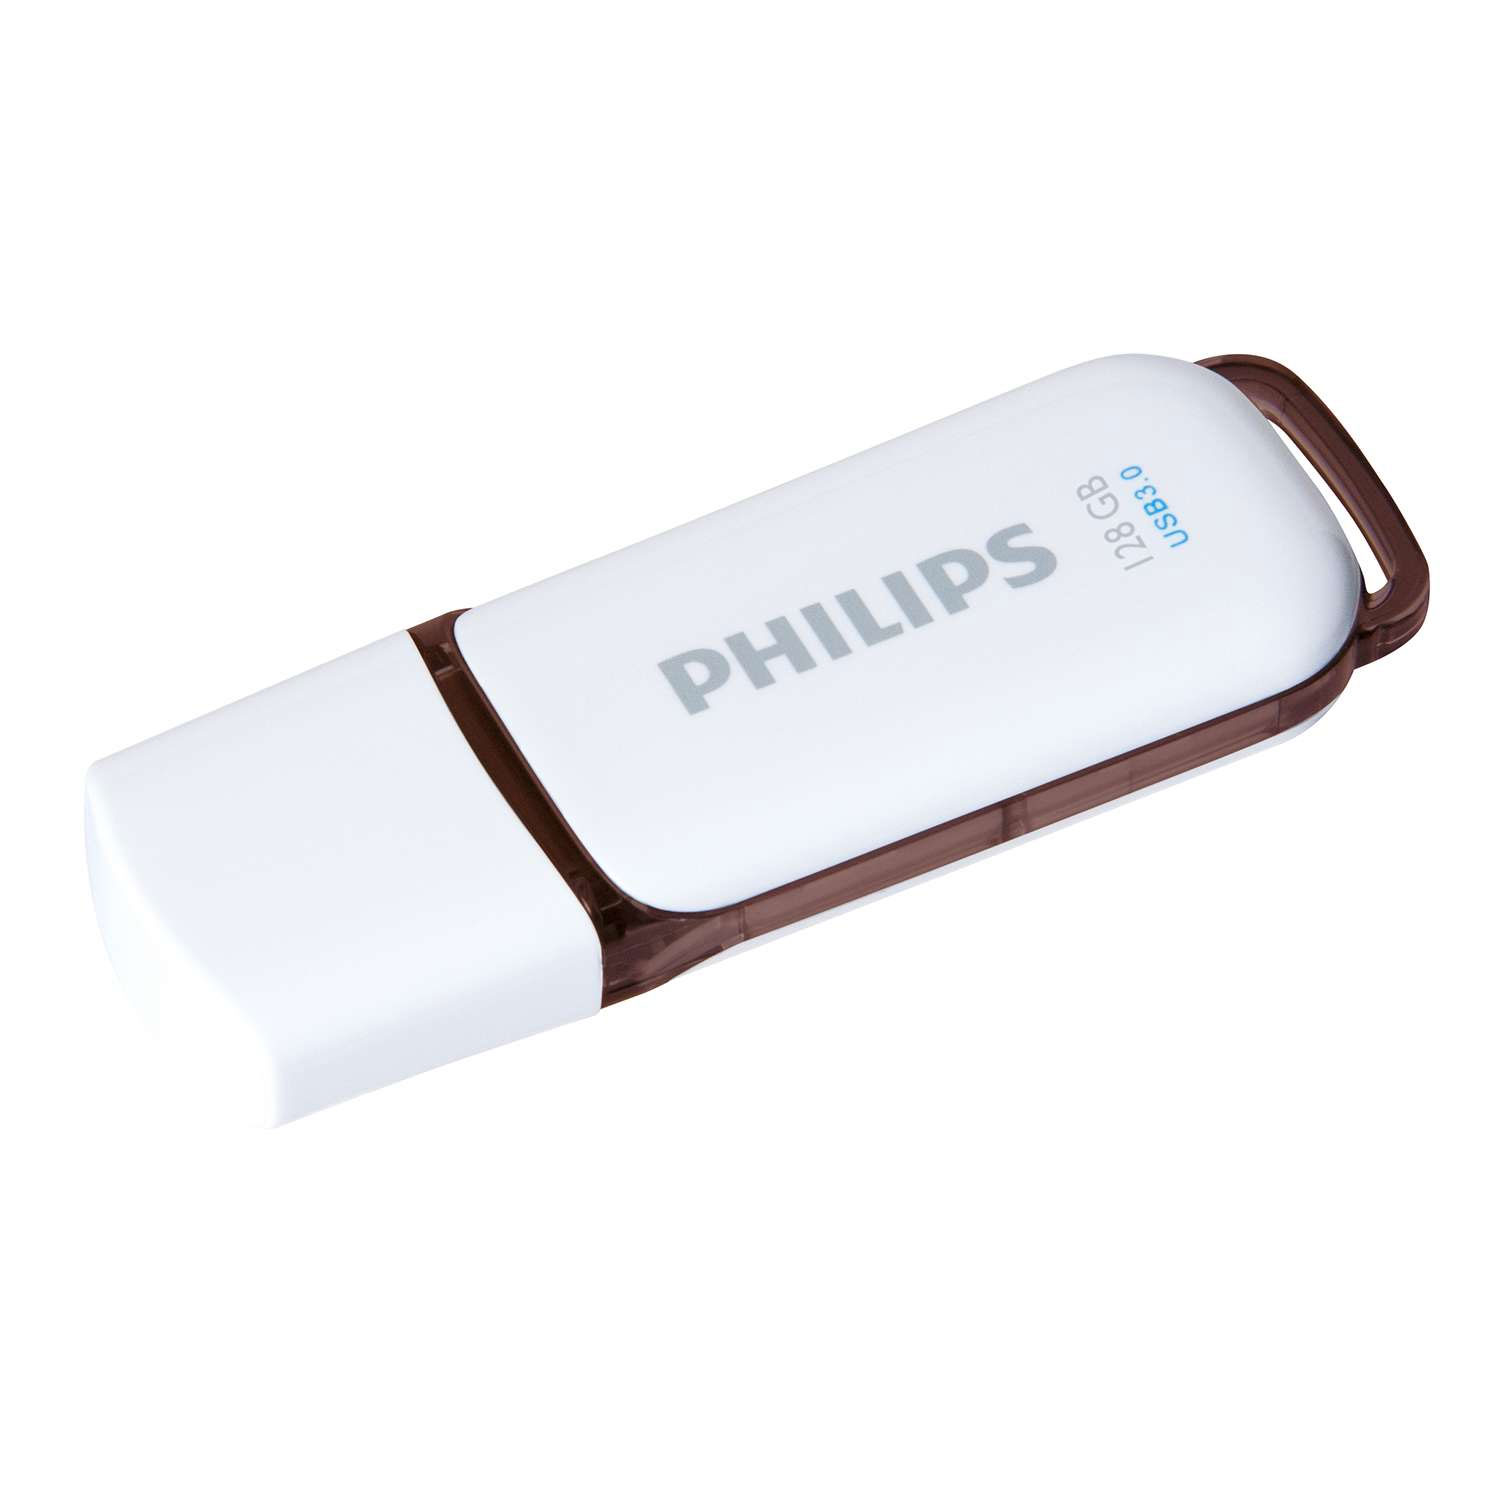  Memorie USB Philips FM12FD75B/10, 128GB, USB 3.0, Alb 